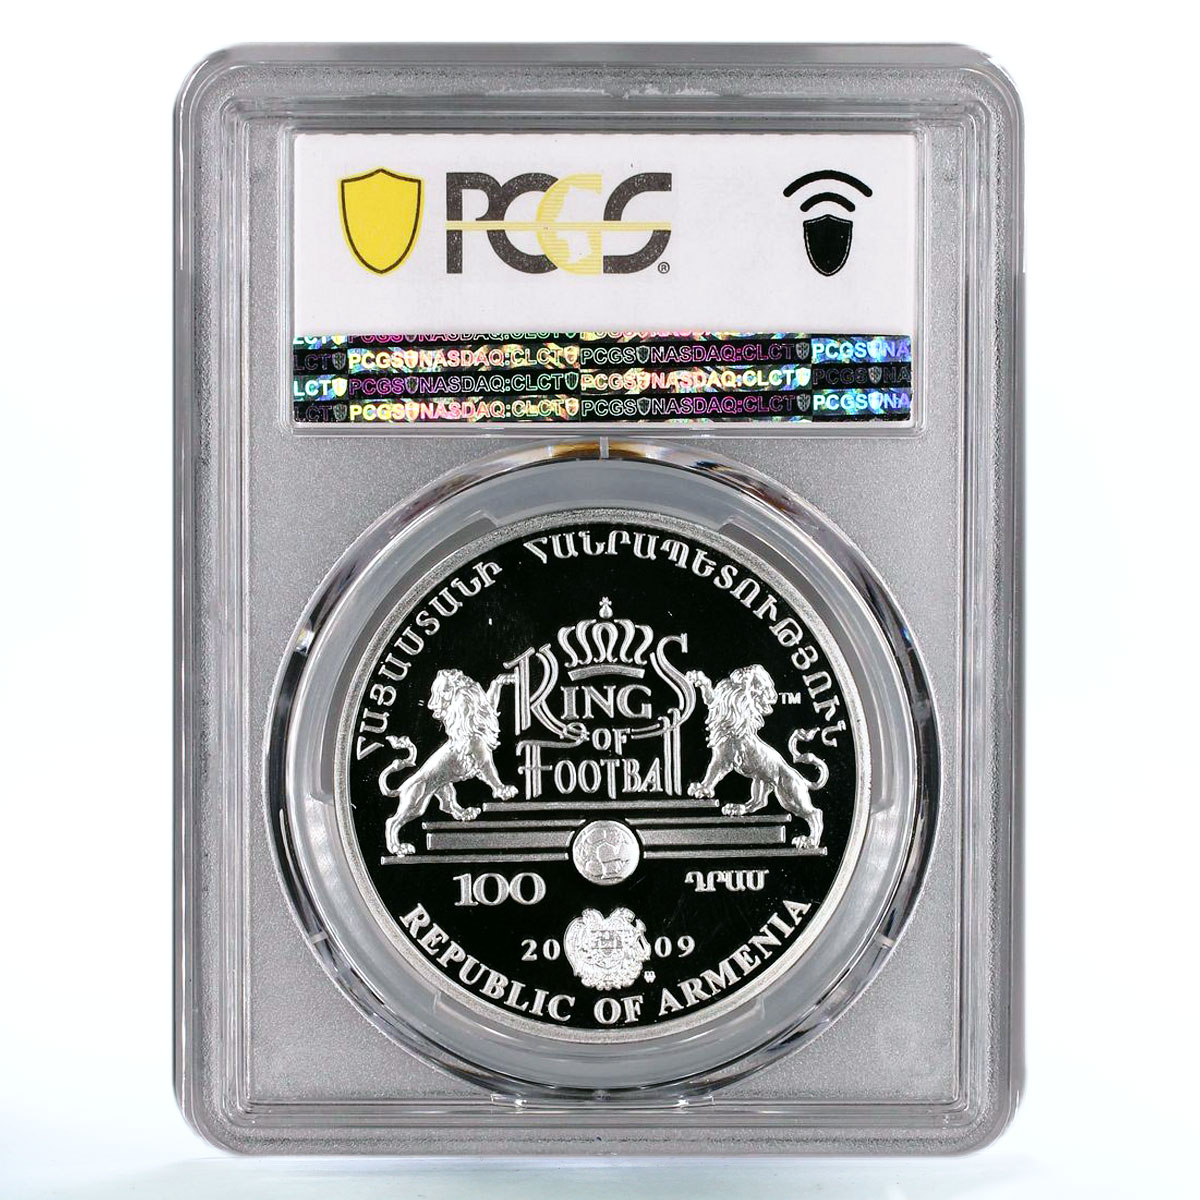 Armenia 100 dram Kings of Football Zbigniew Boniek PR69 PCGS silver coin 2009